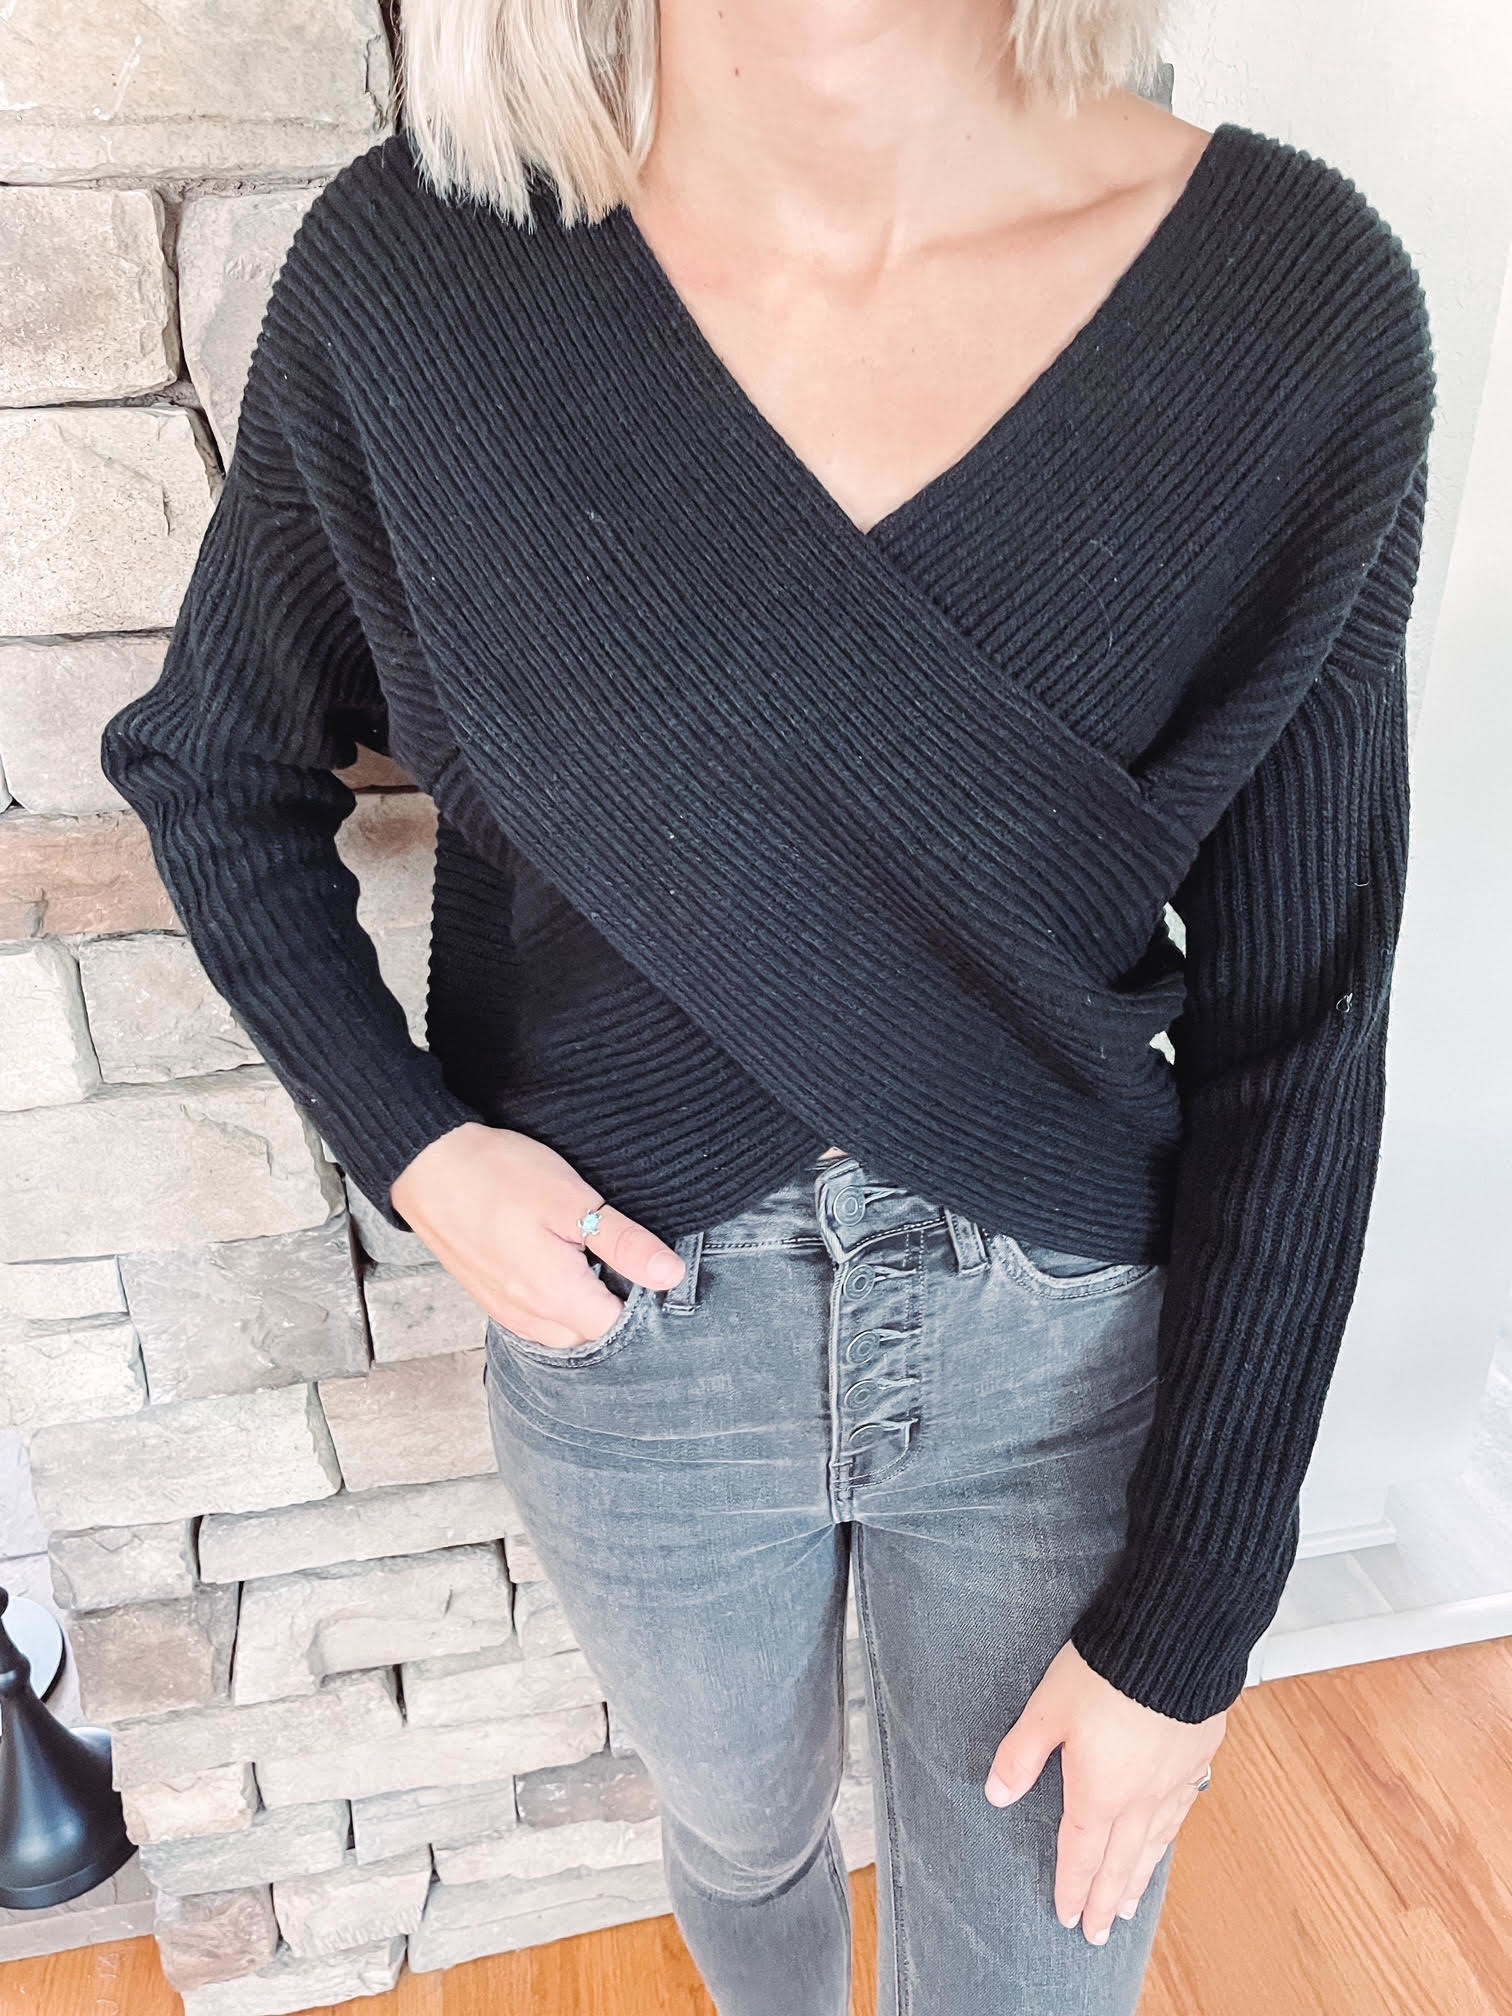 Savannah Black Sweater